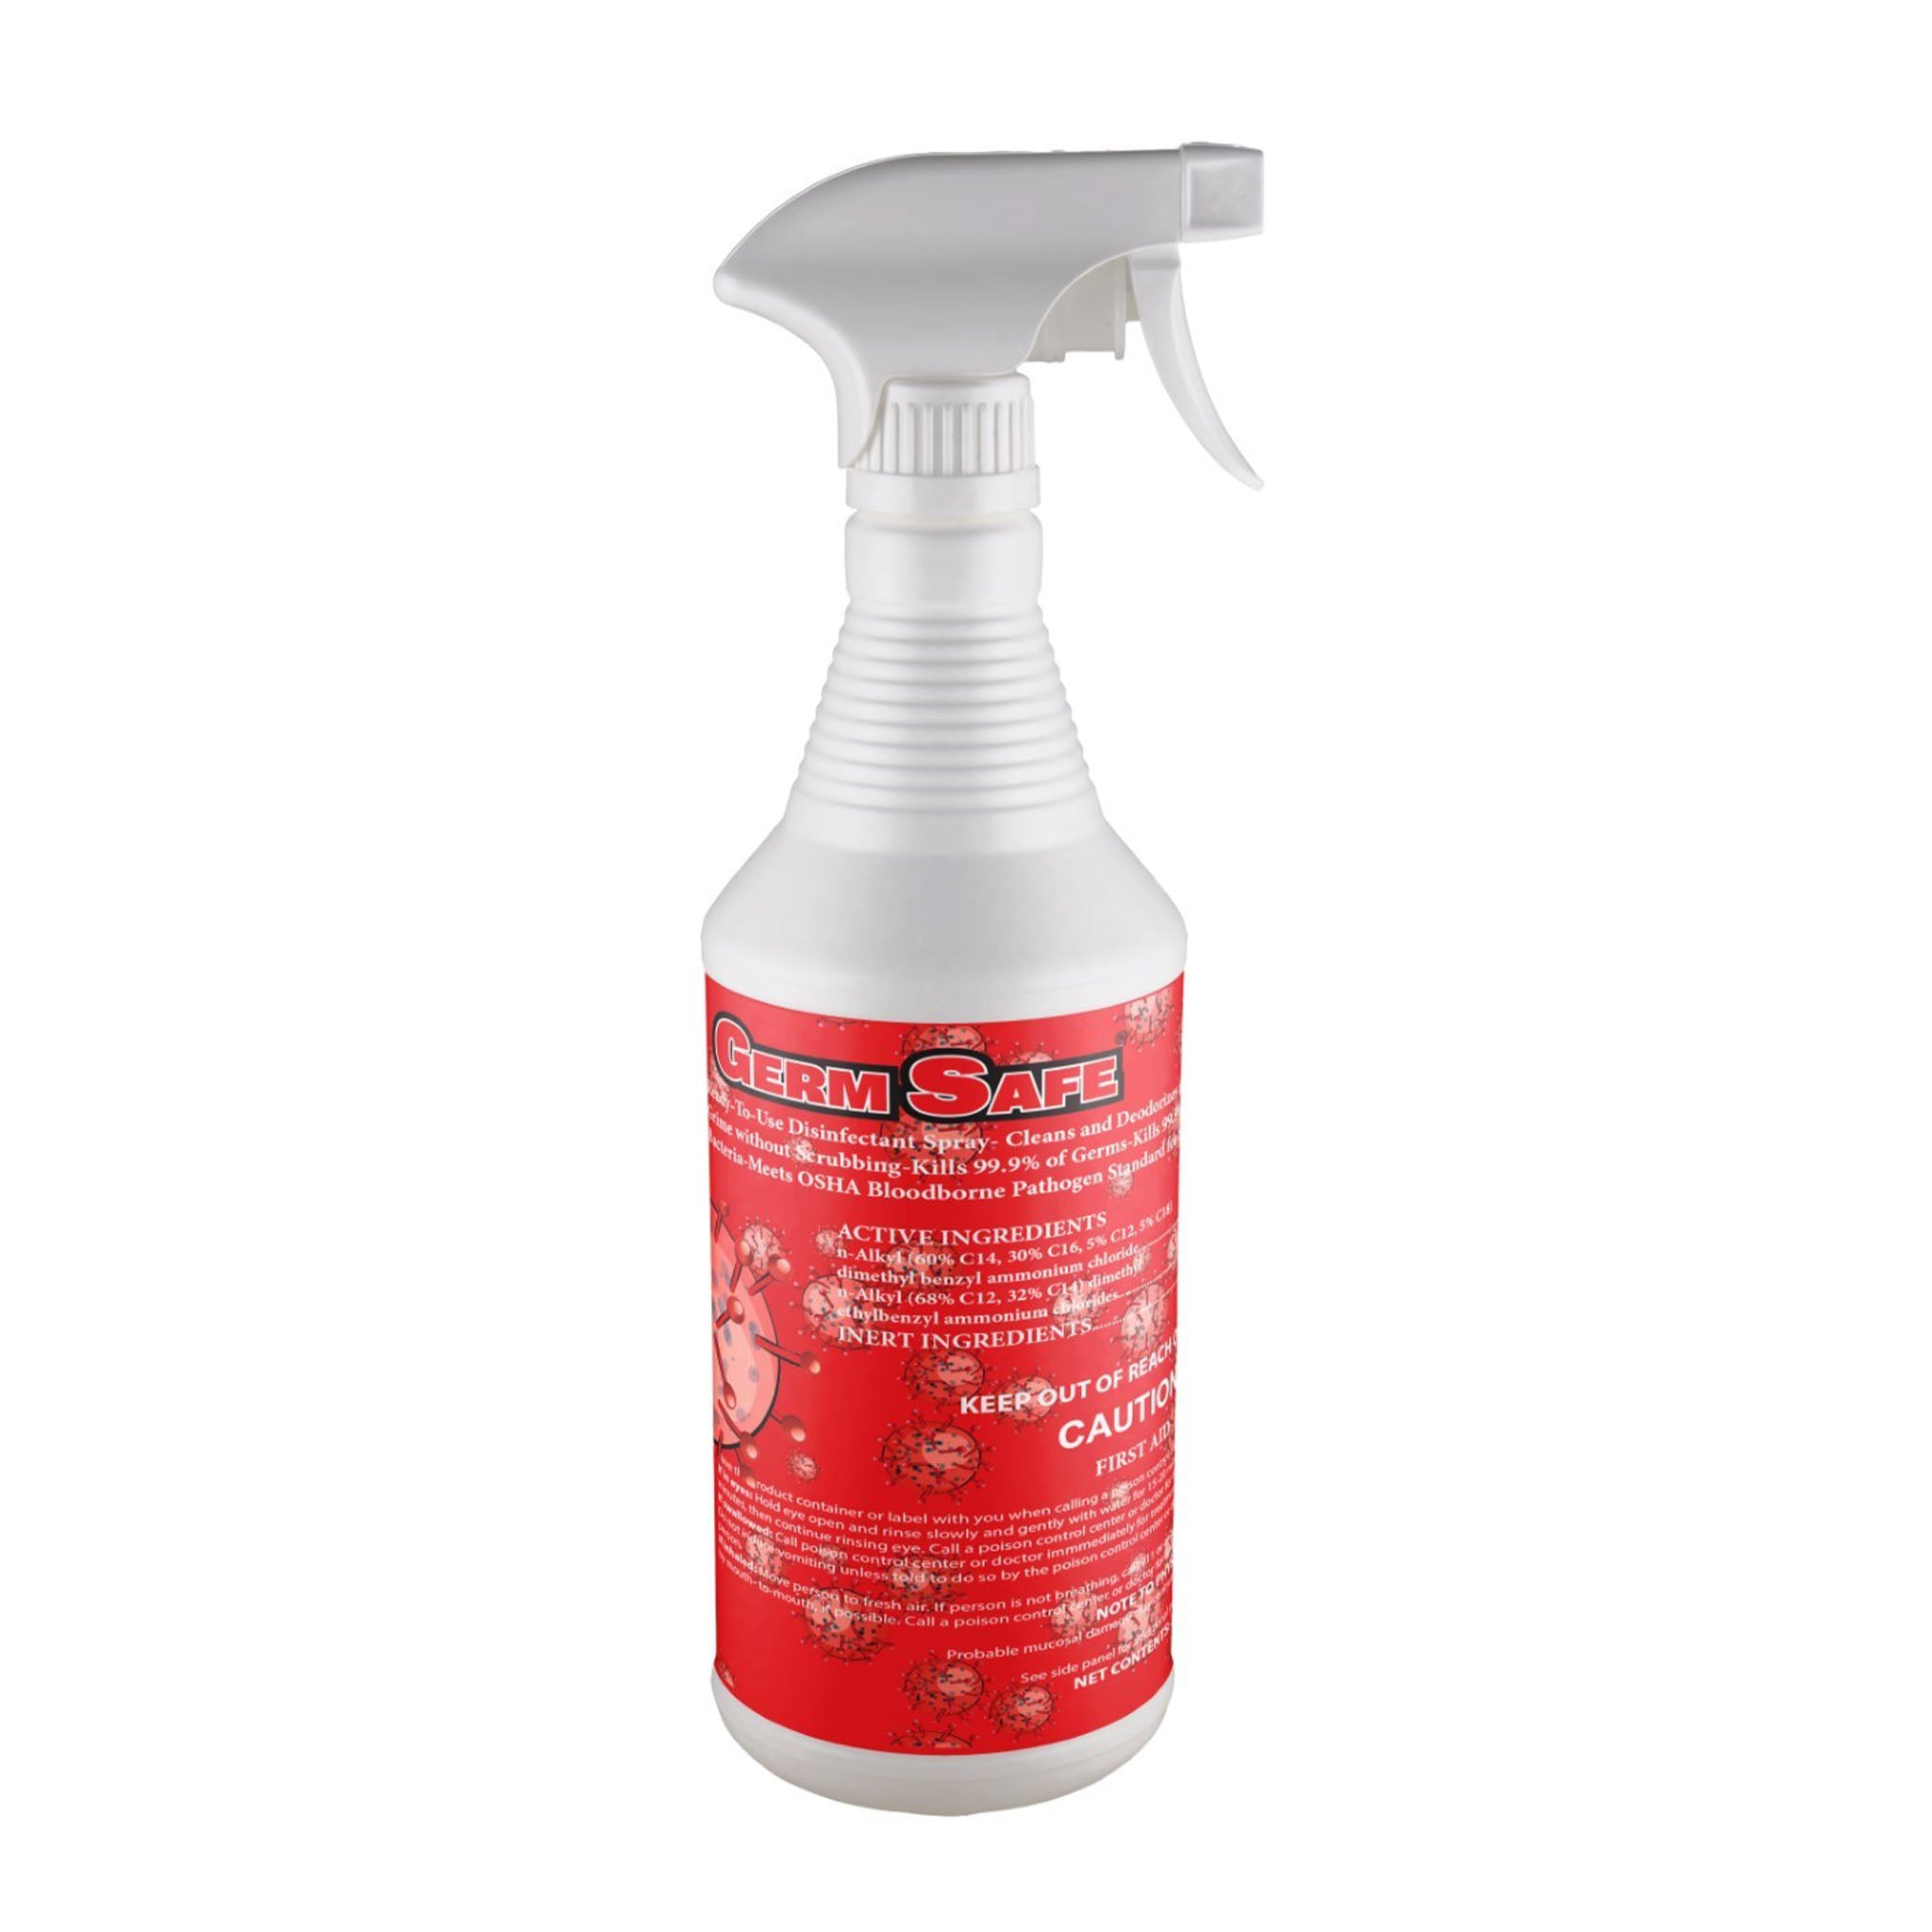 Germ Safe Disinfectant, Cleaner, Spray 32 oz.